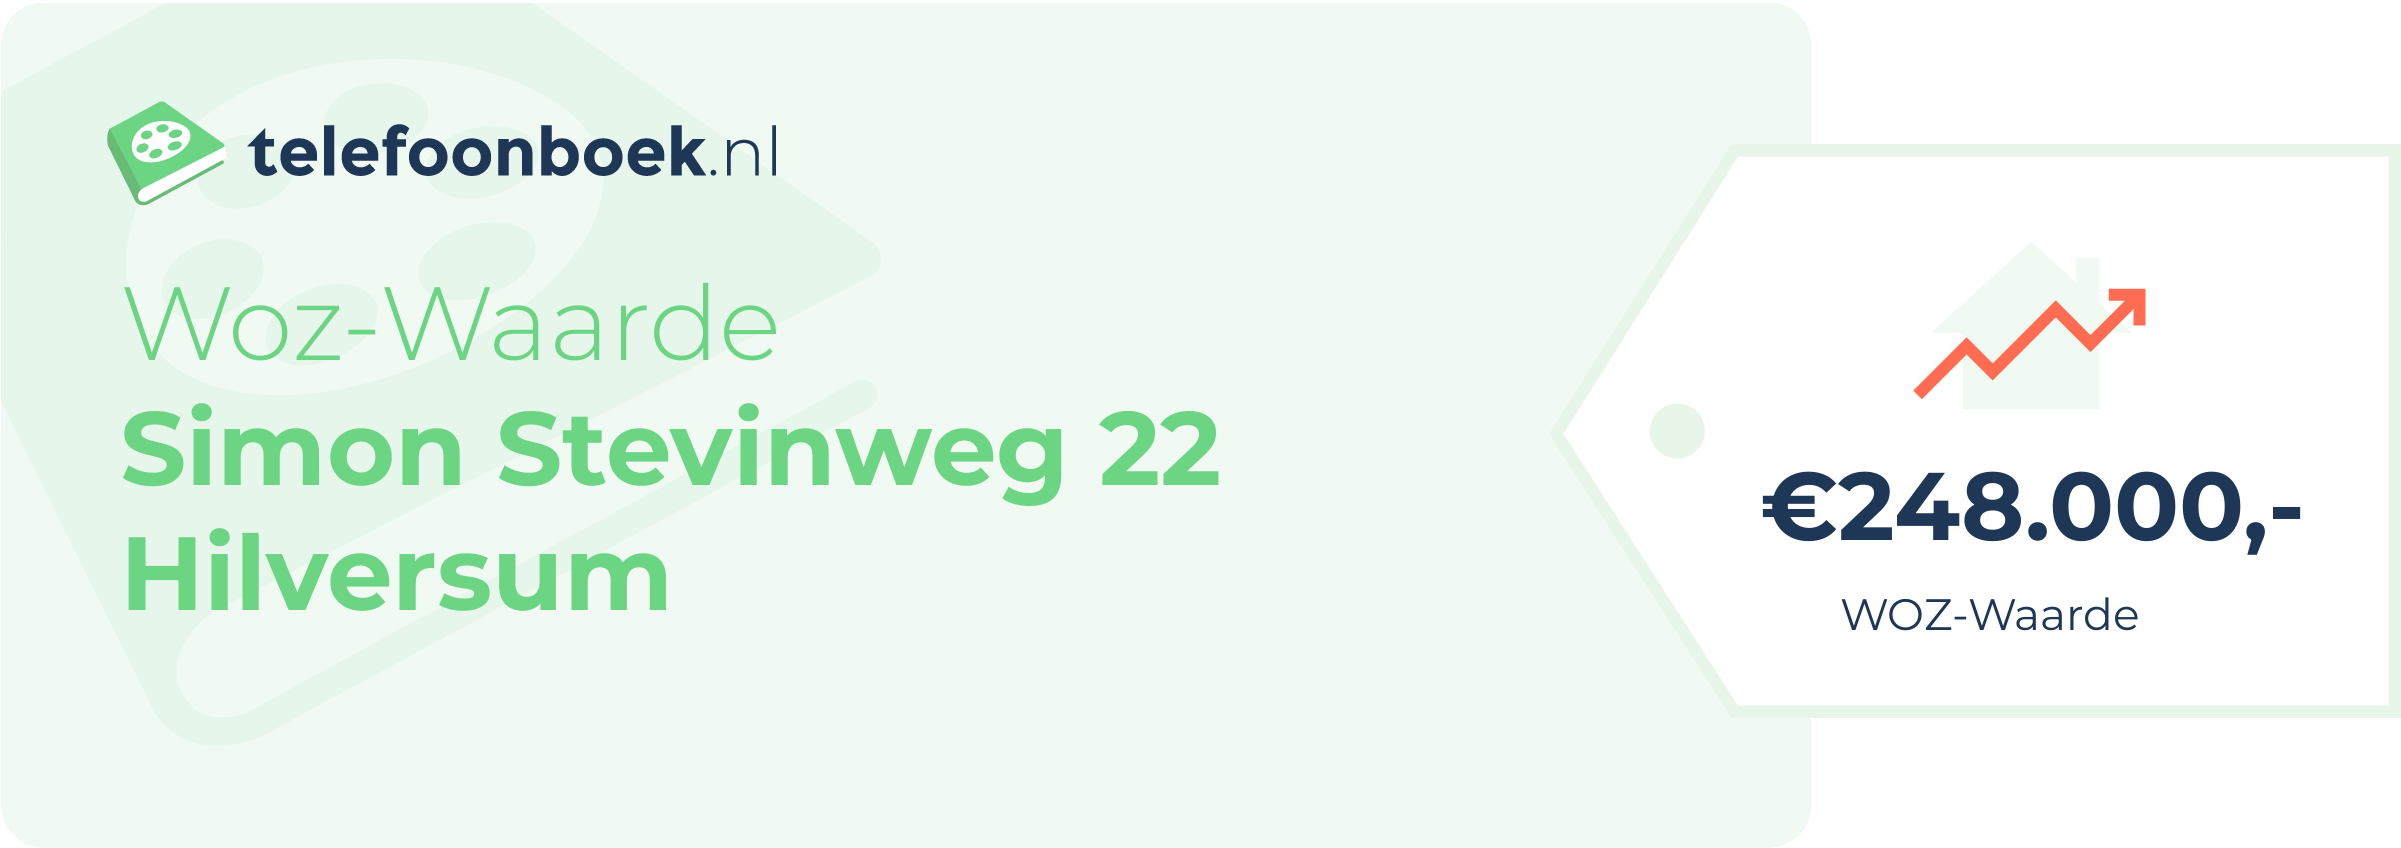 WOZ-waarde Simon Stevinweg 22 Hilversum